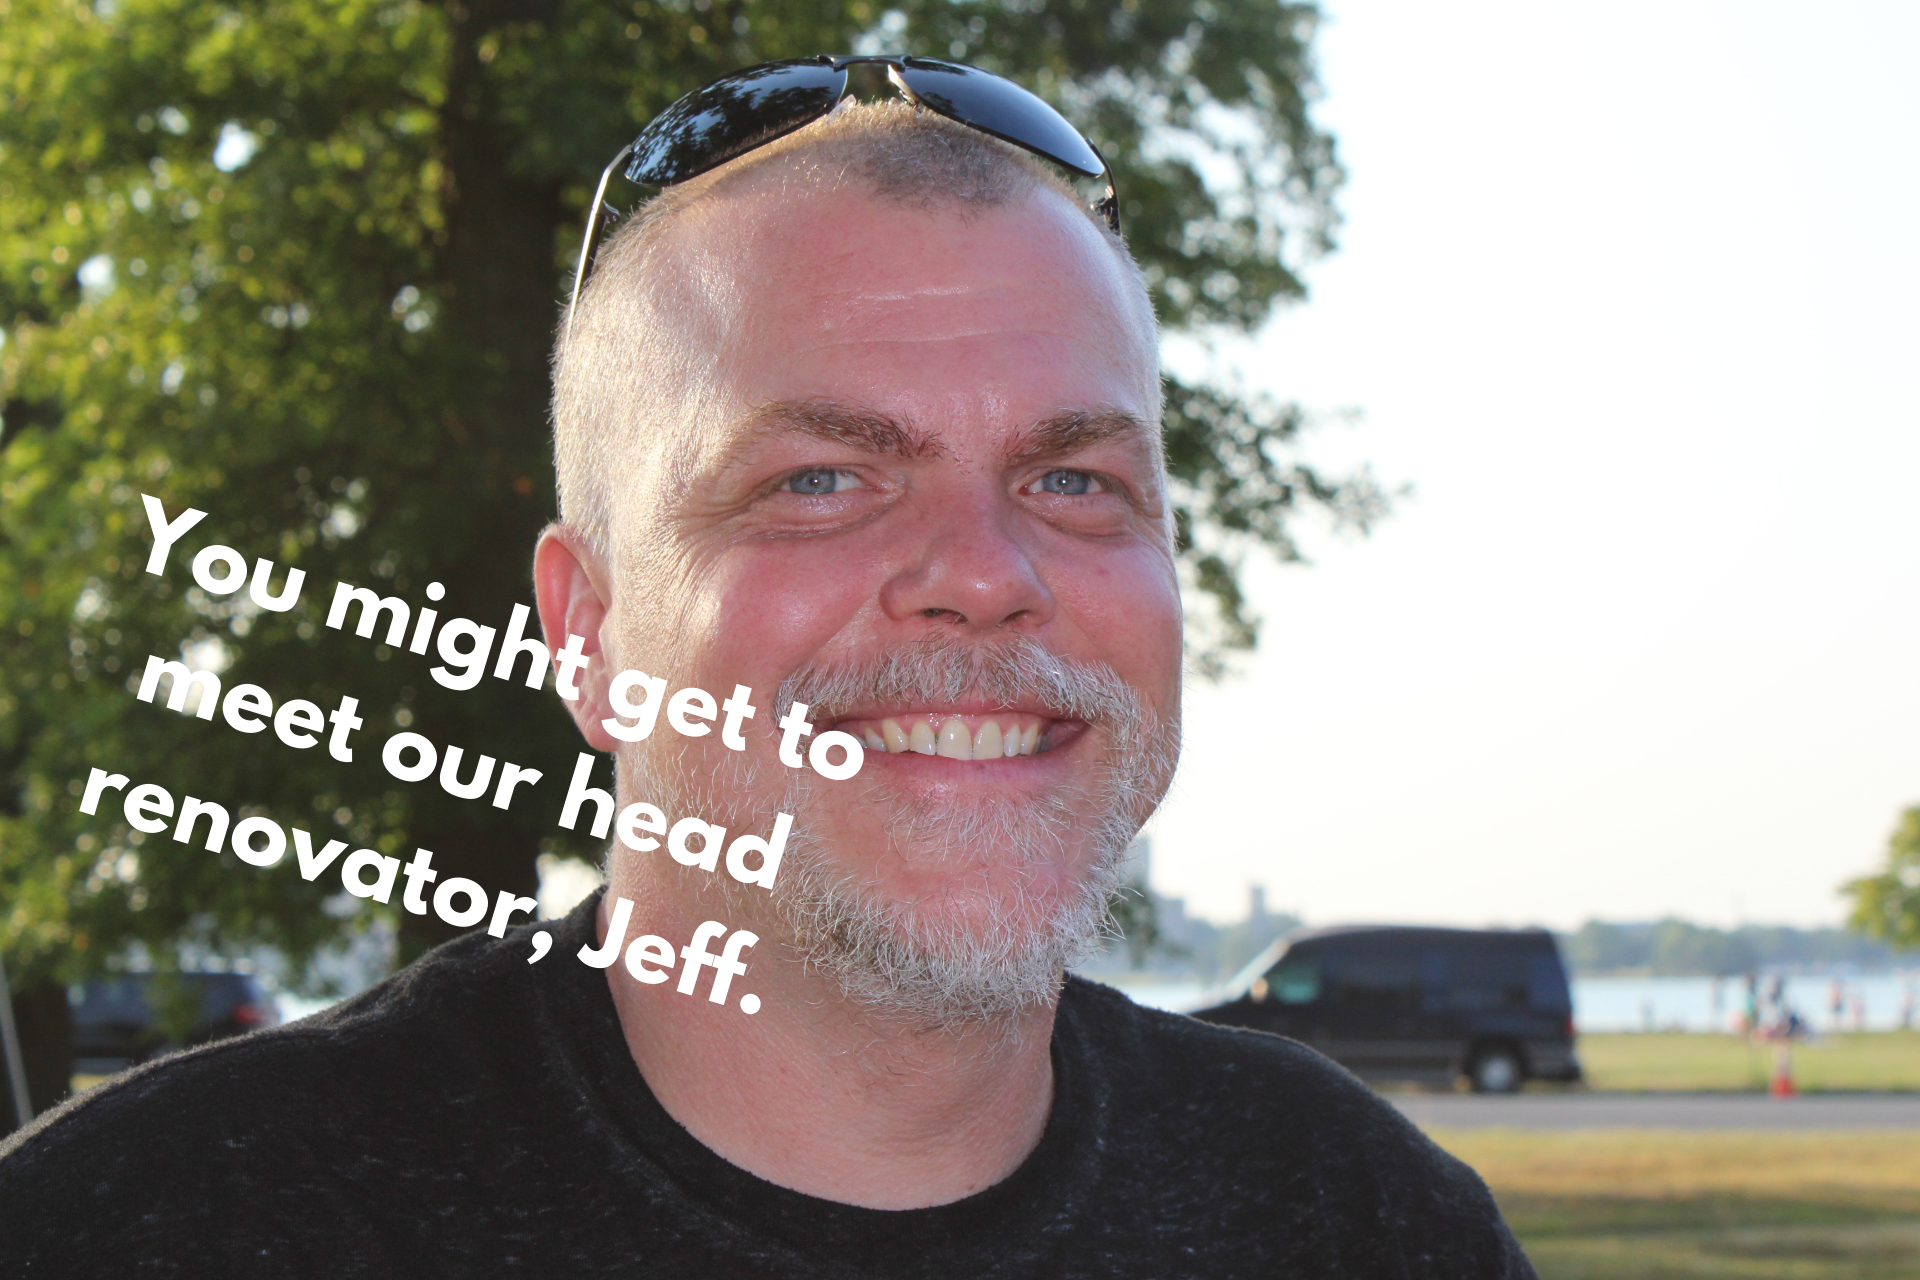 11jeffYou might meet our head renovator, Jeff.png